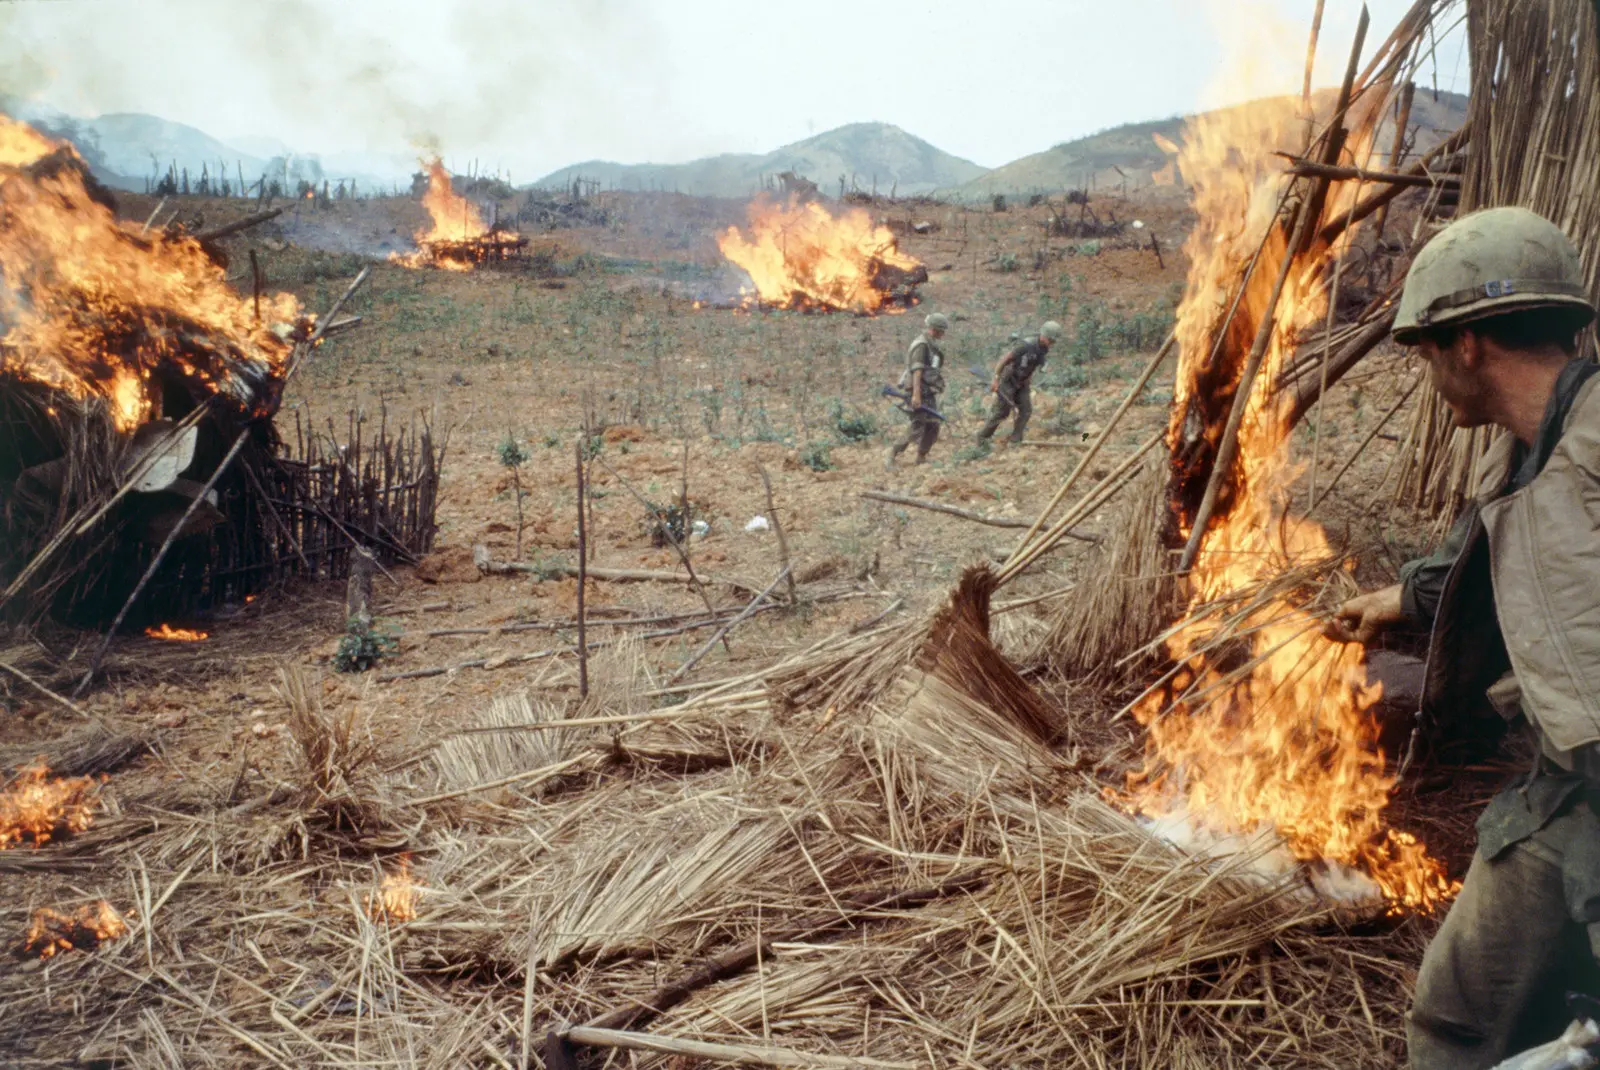 Guerra do Vietnã Contexto, Causas e Desfecho